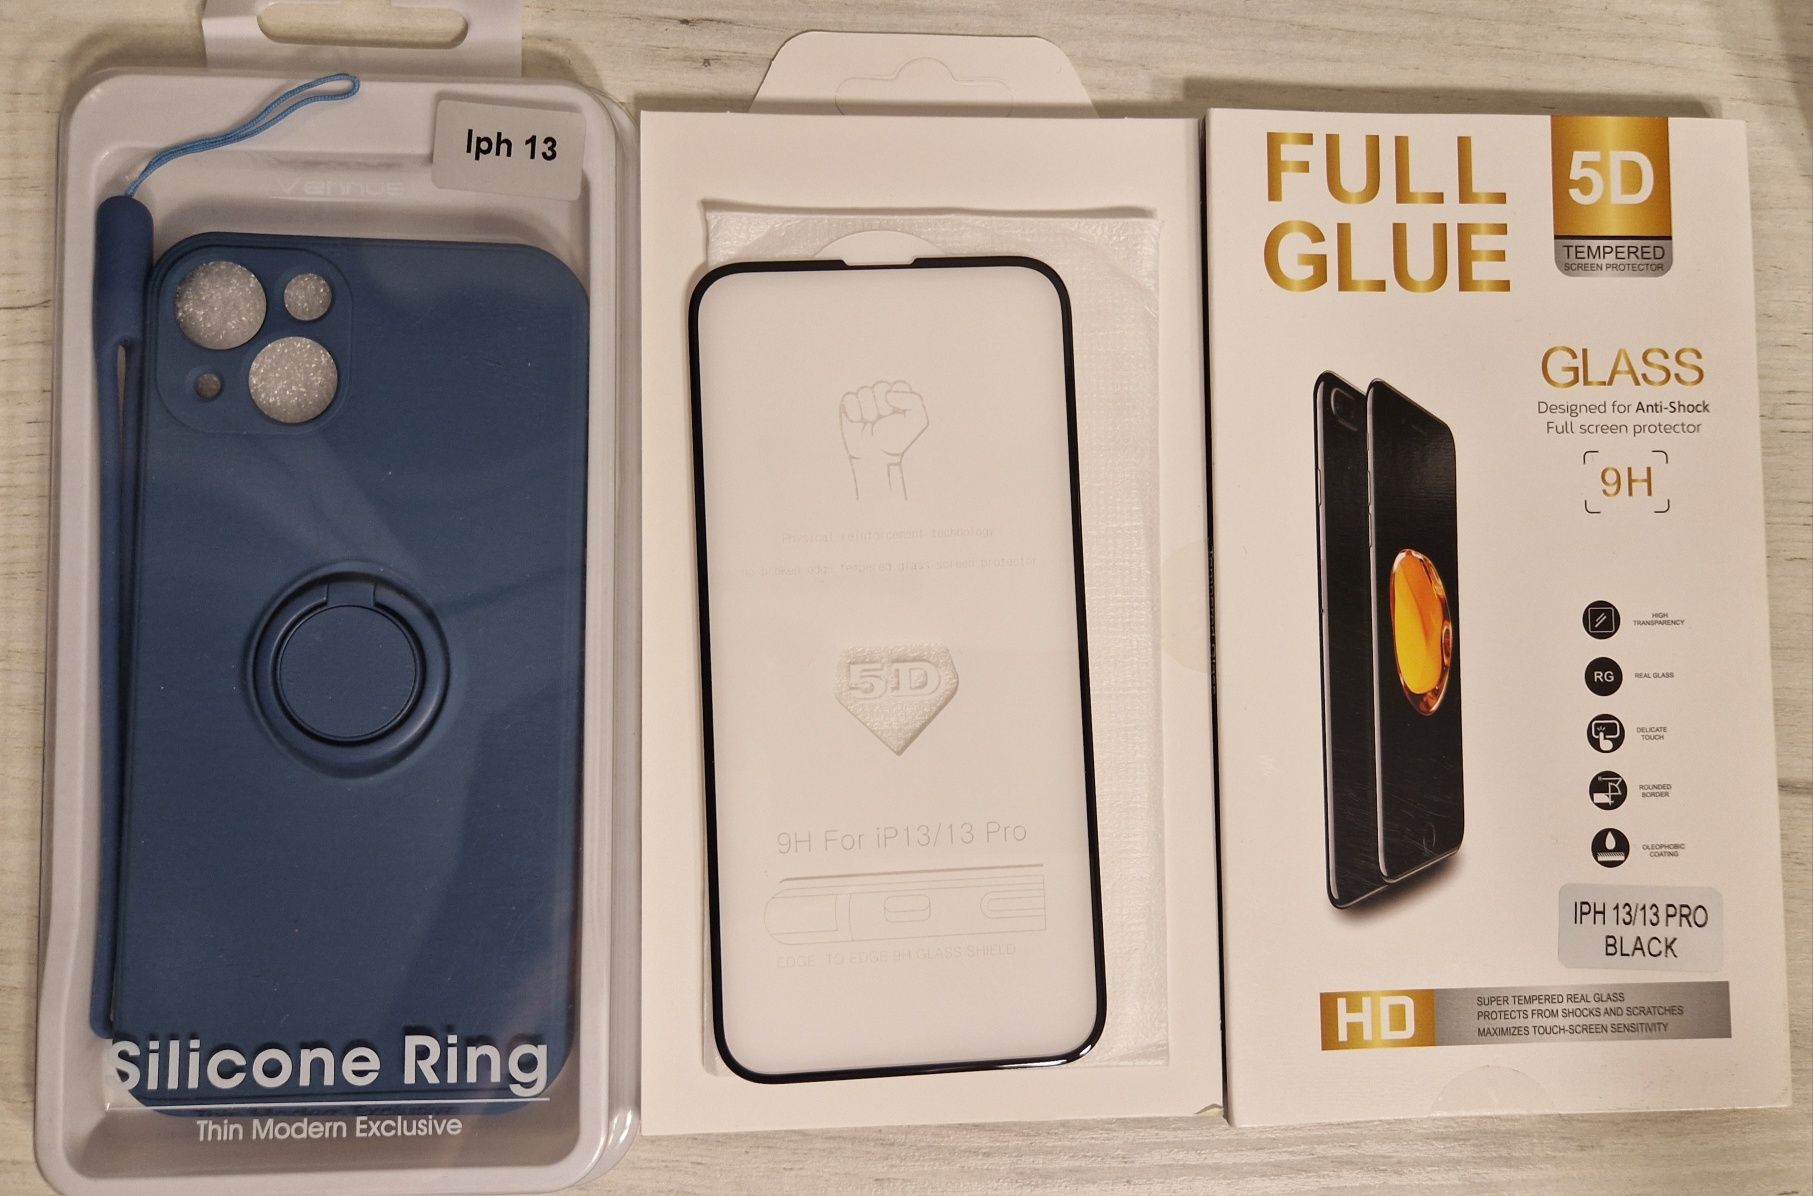 Zestaw do telefonu Iphone 13 Case Silicone Ring + szkło 5d full glue